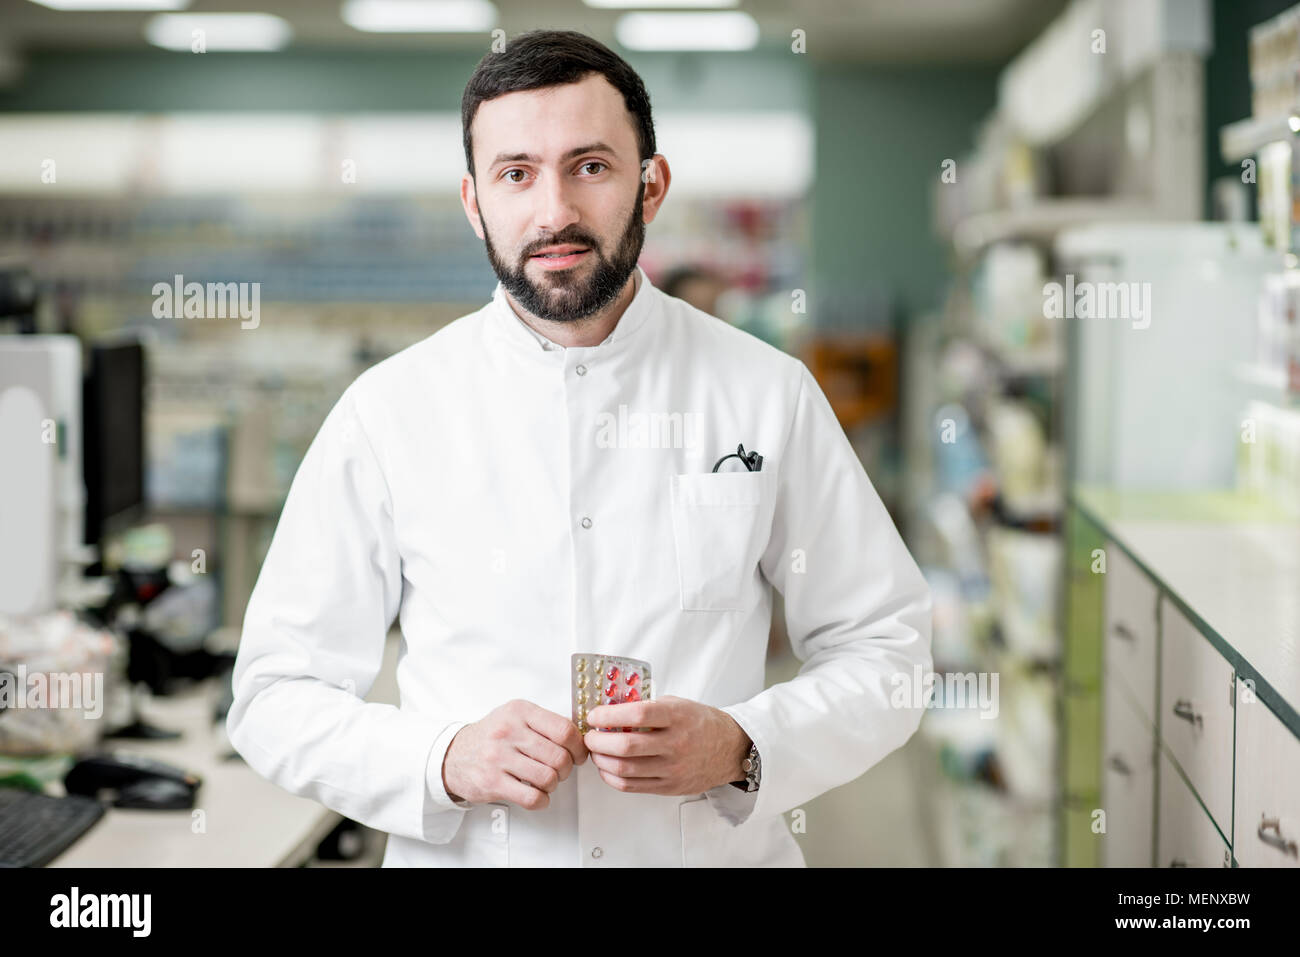 Pharmacist in the pharmacy store Stock Photo